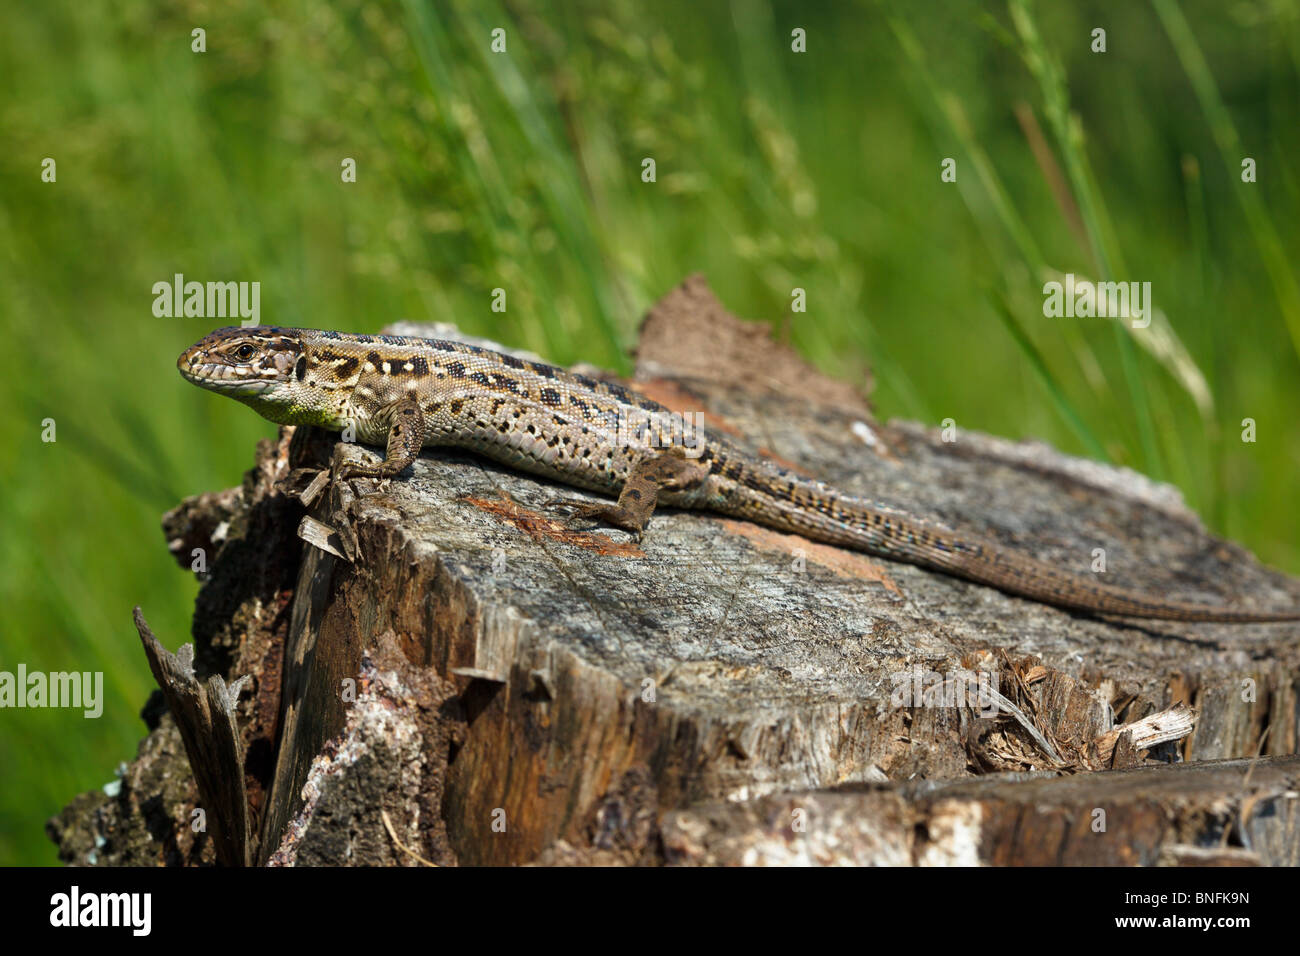 Sand Lizard, Lacerta agilis. The lizard is on a tree stub. Stock Photo